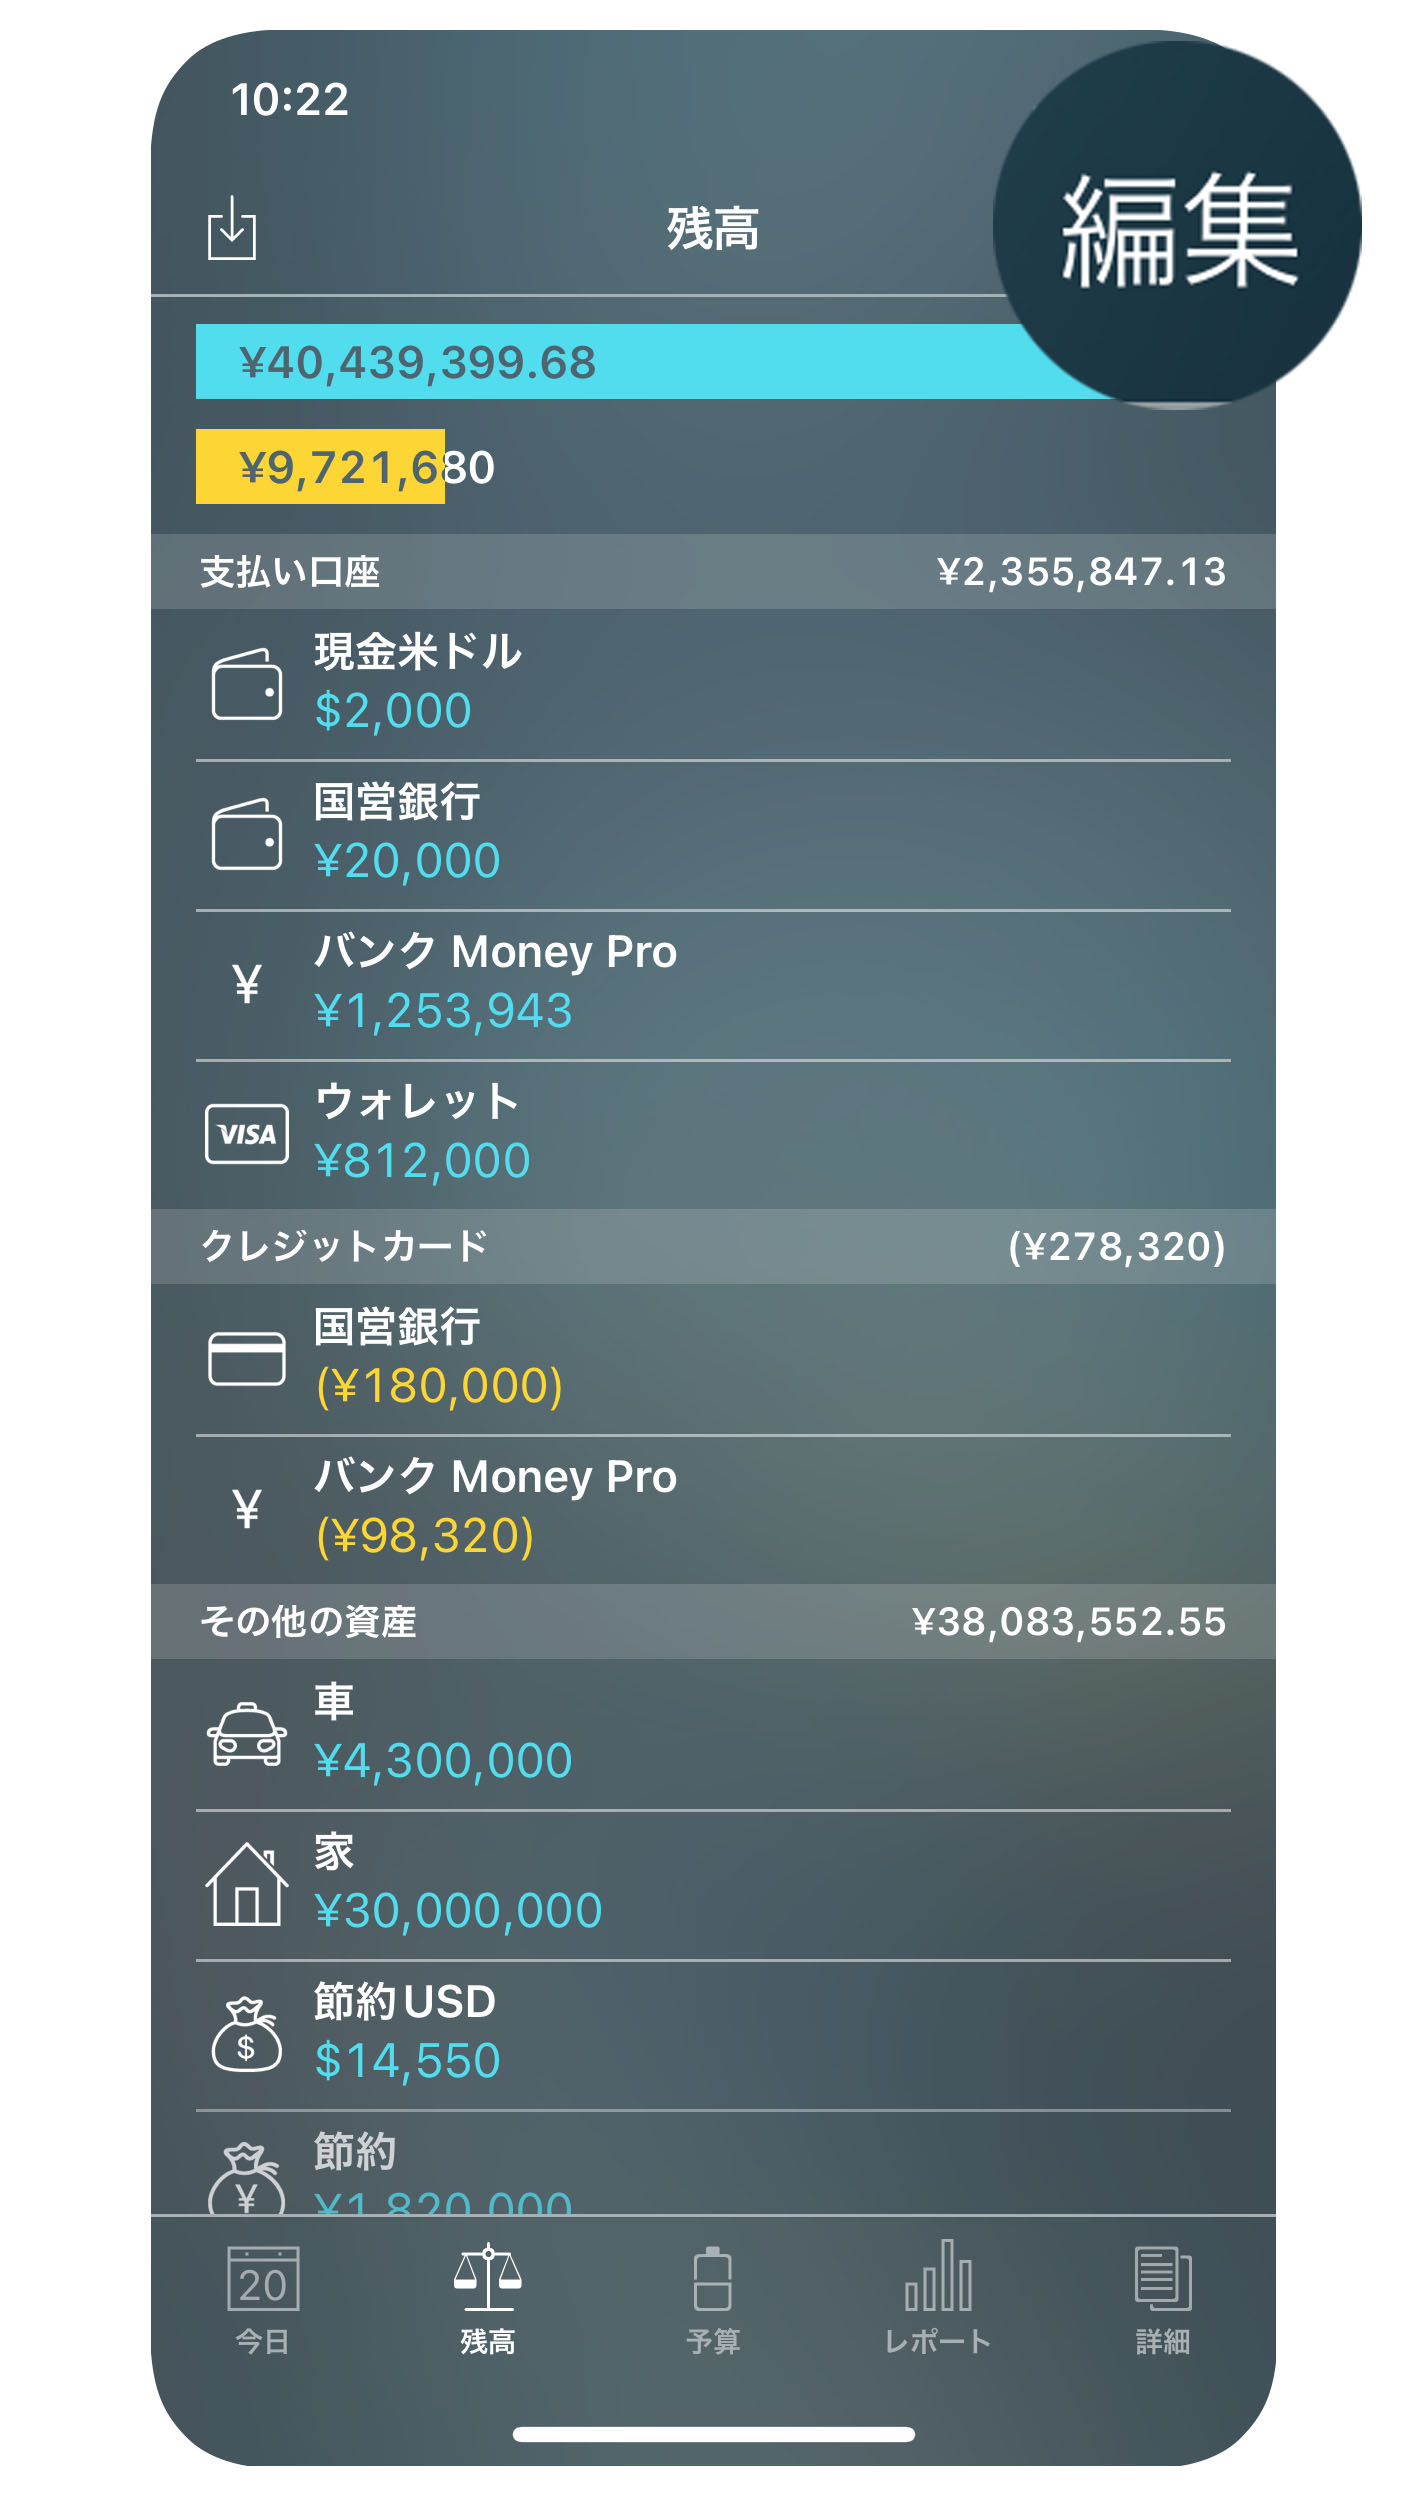 Money Pro - 勘定/ 口座（Accounts） - 編集 - iPhone